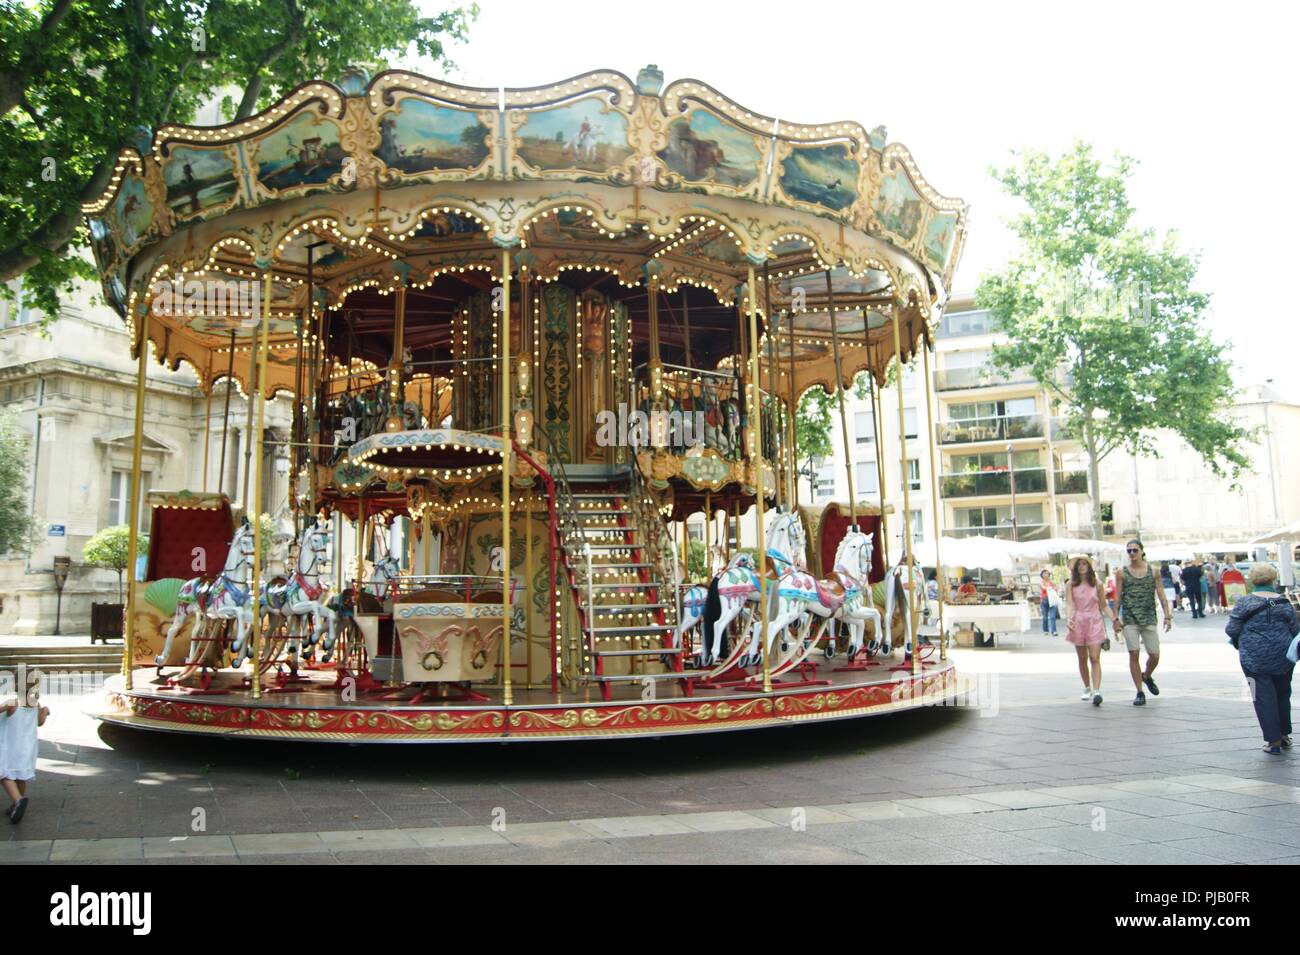 Carousel funfair ride in Avignon, France Stock Photo